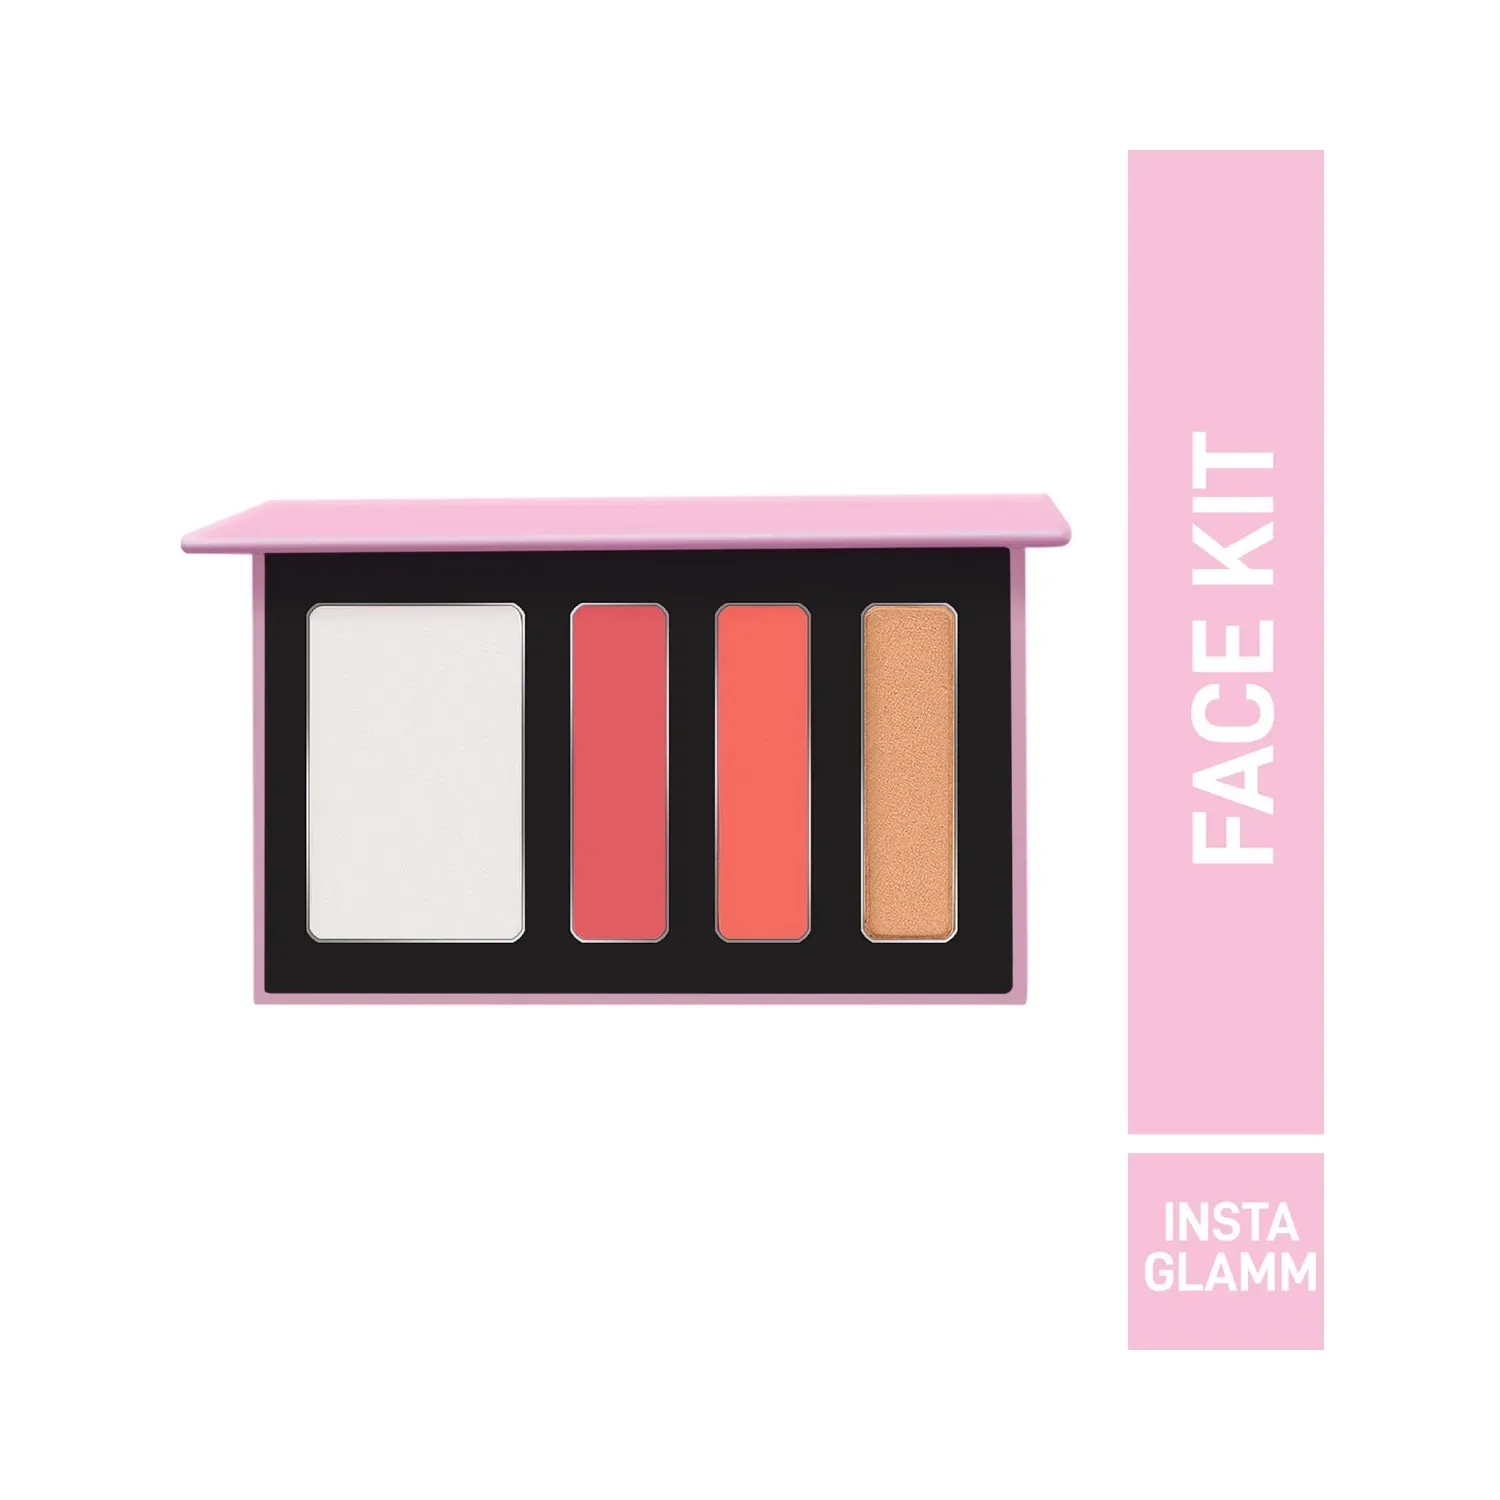 MyGlamm | MyGlamm Popxo Makeup Collection Face Kit - Instaglam (11g)